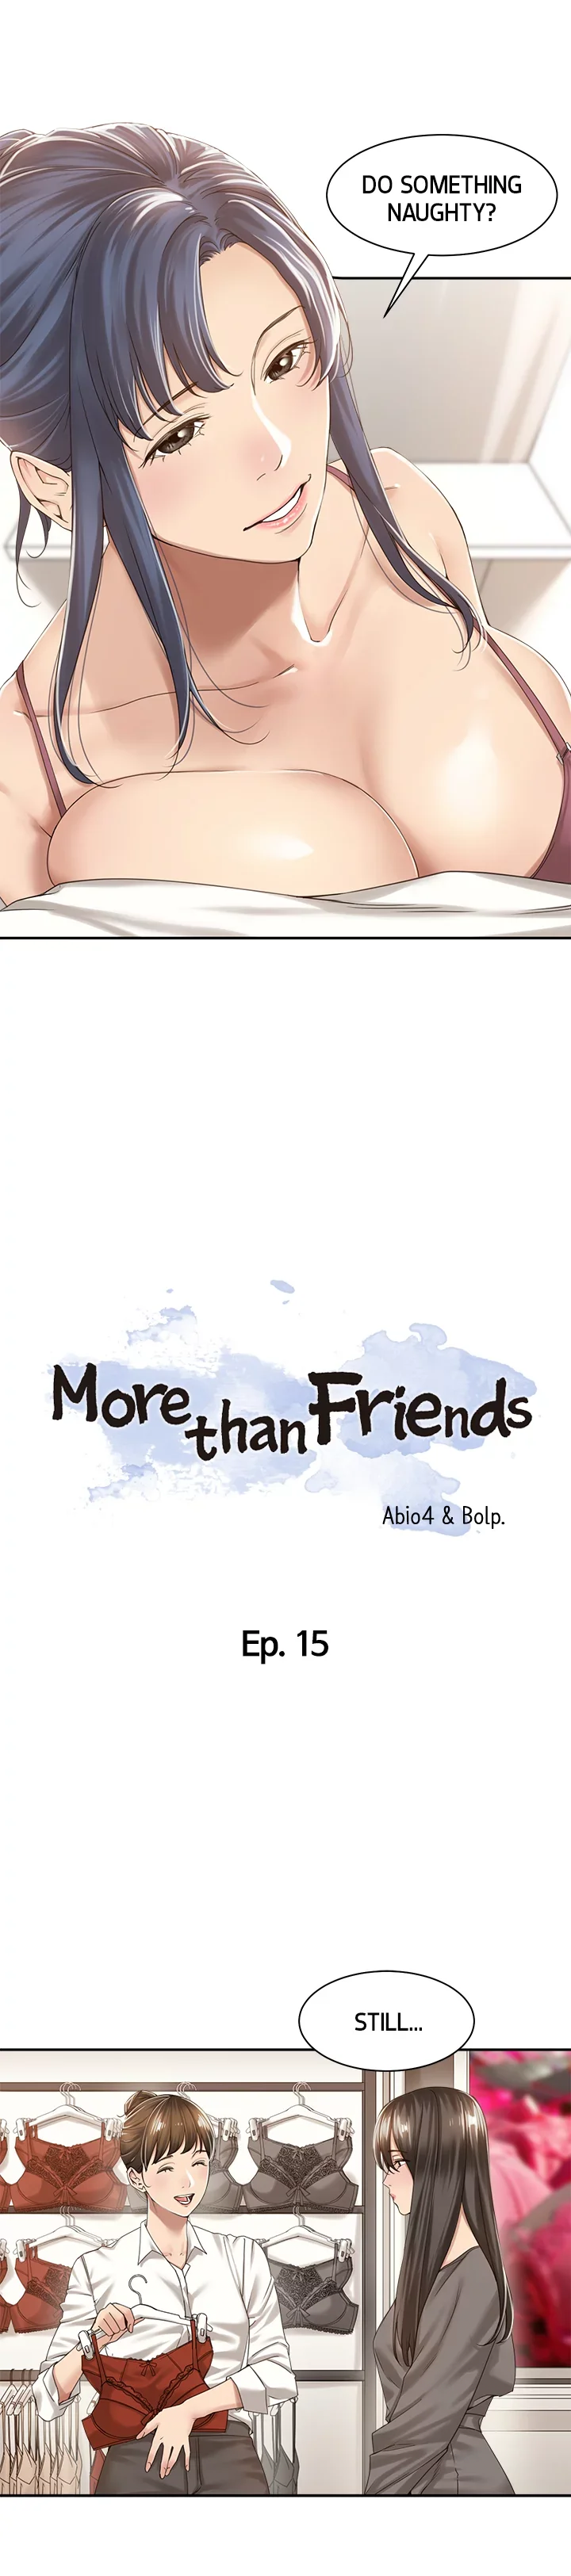 more-than-friends-chap-15-5